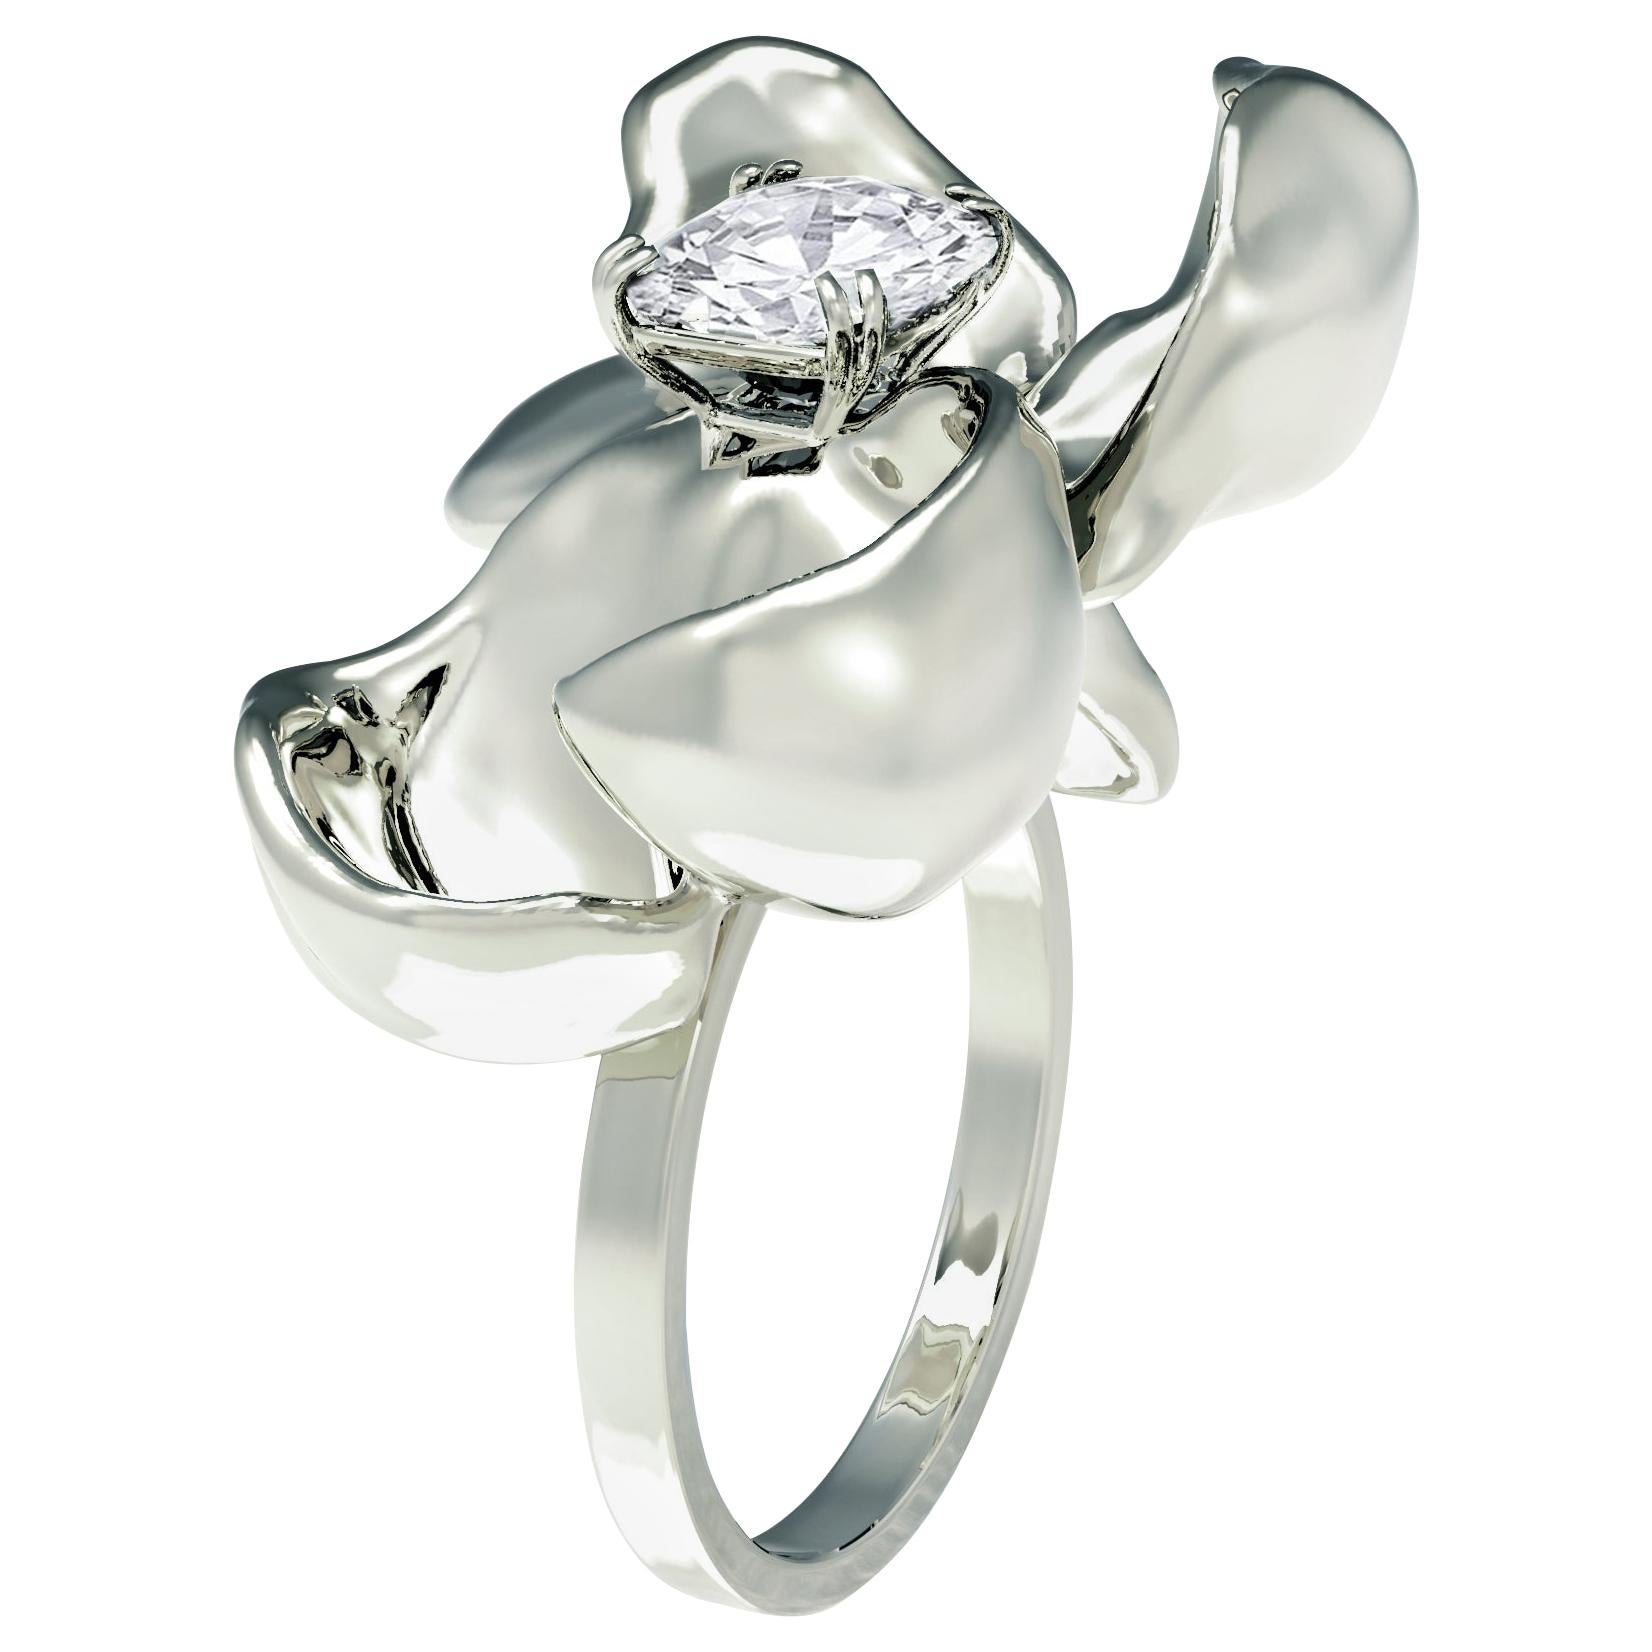 Eighteen Karat White Gold Engagement Ring with One Carat Natural Diamond